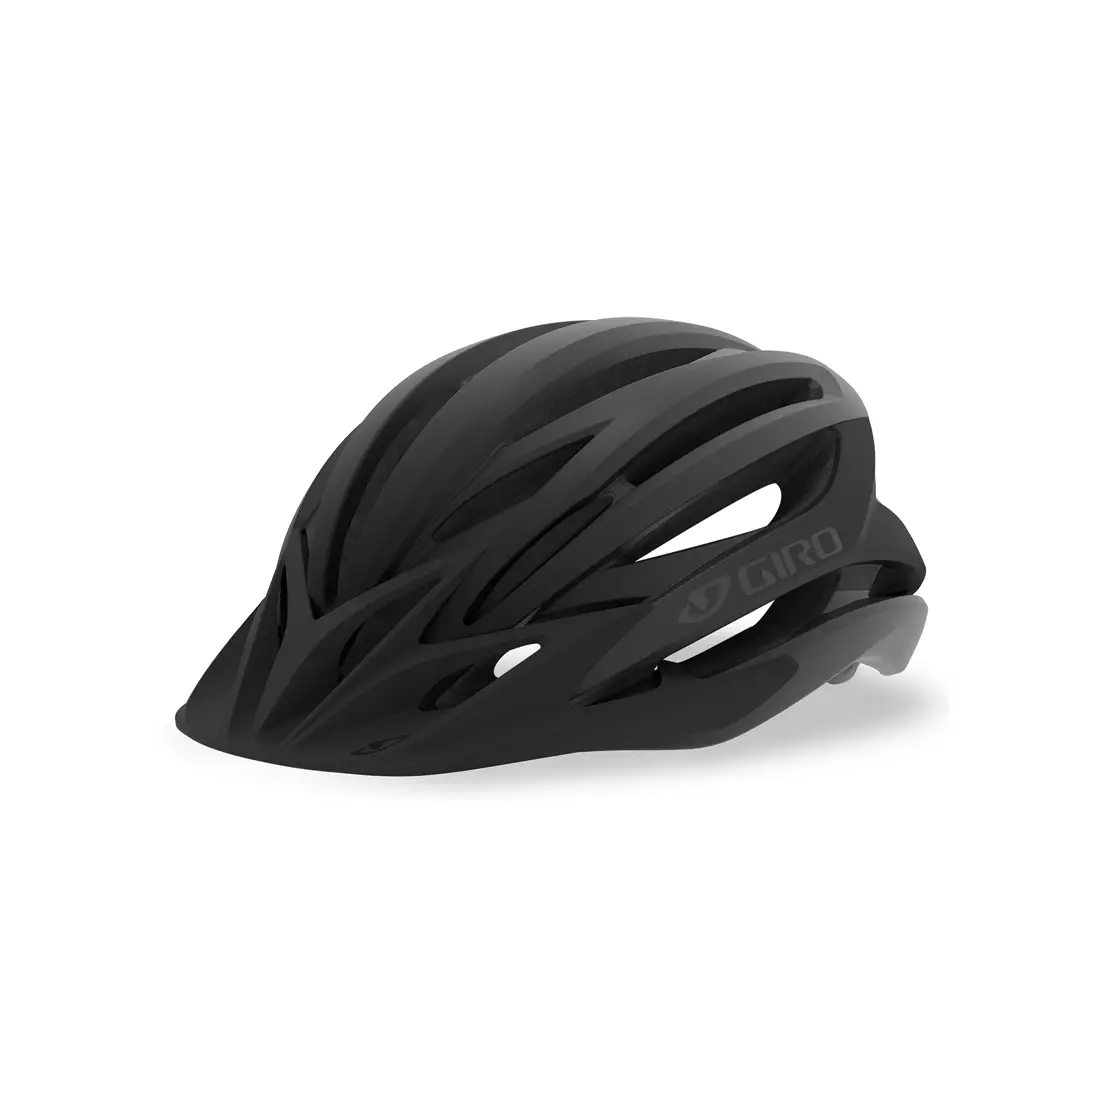 GIRO ARTEX INTEGRATED MIPS Casca de bicicleta MTB, matte black